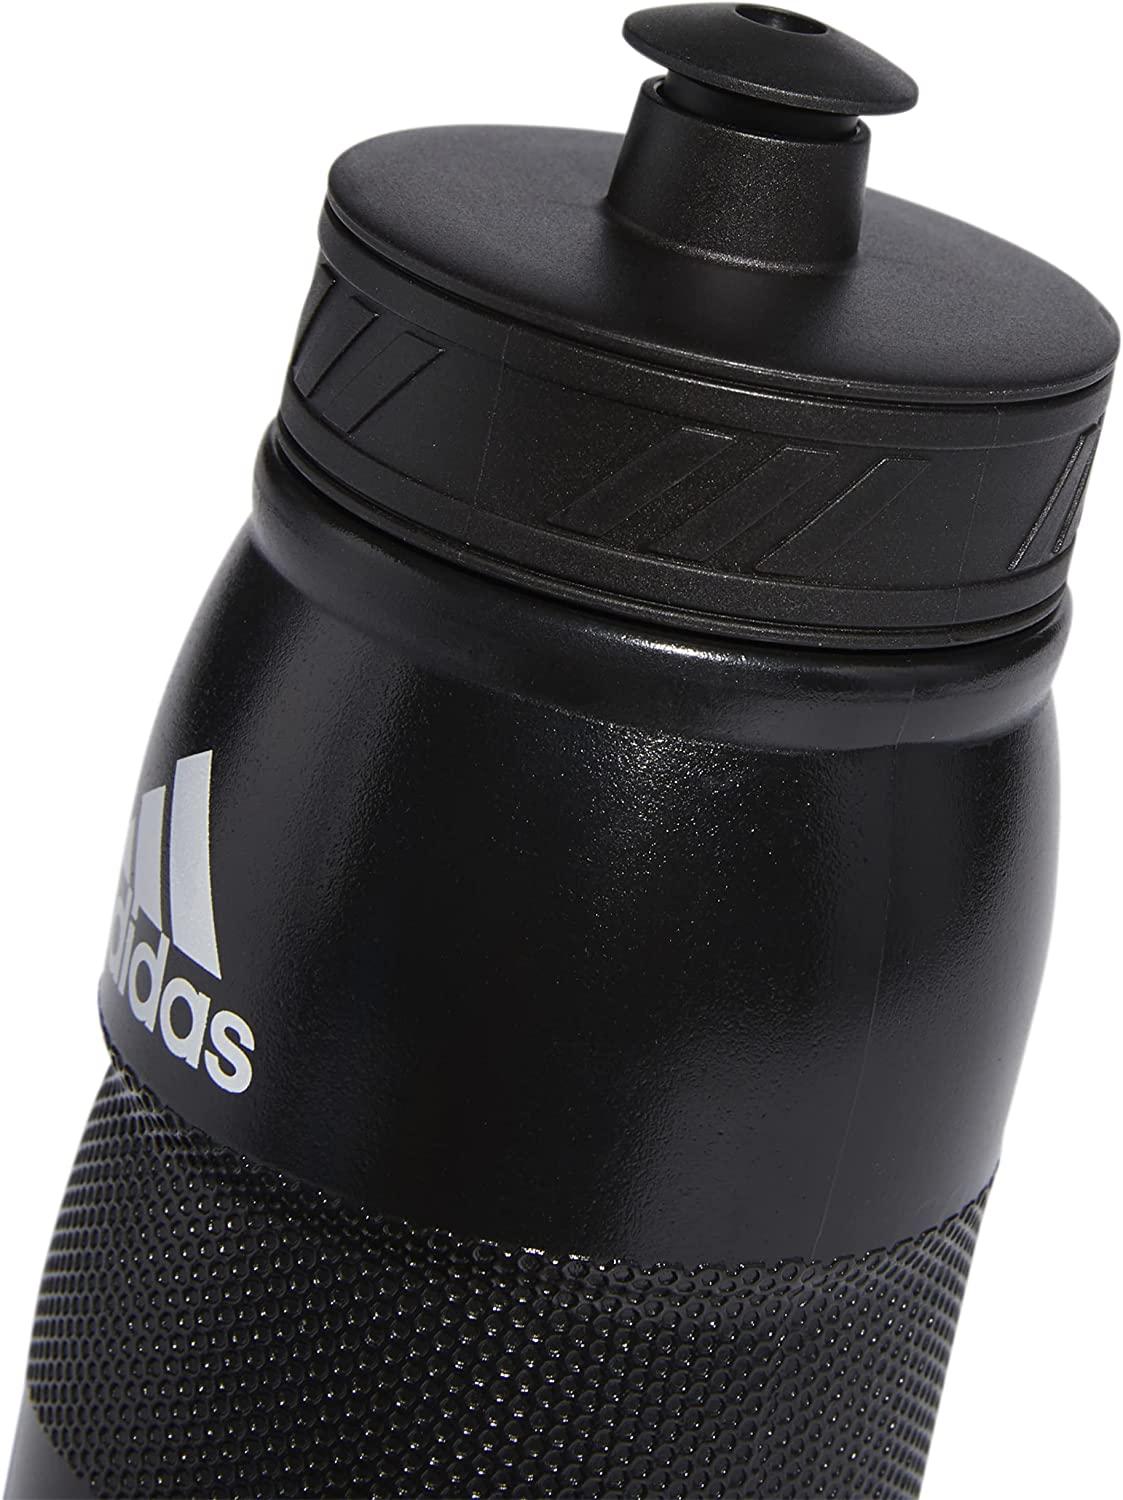 adidas 750 ML (28 oz) Stadium Refillable Plastic Sport Water Bottle  Black/White 750 Milliliters